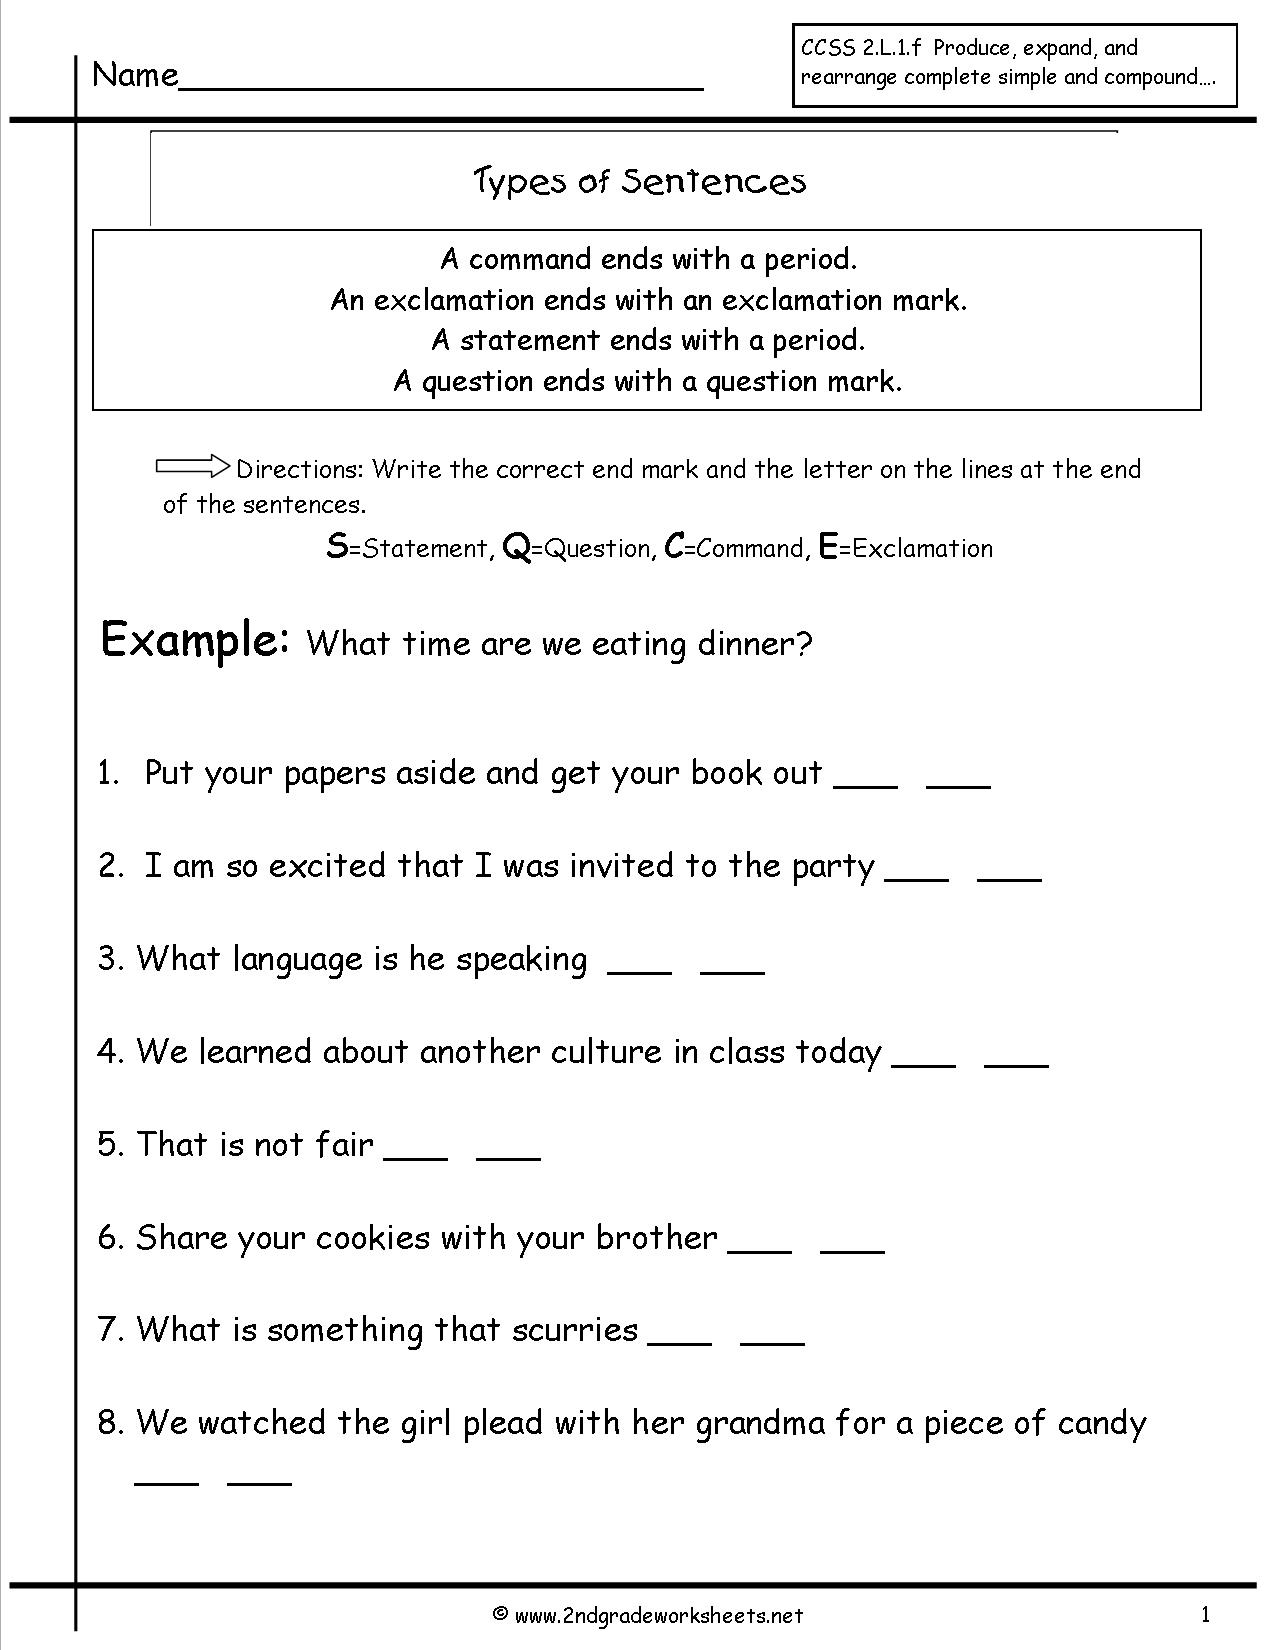 4 Types Of Sentences Worksheets For 2nd Grade